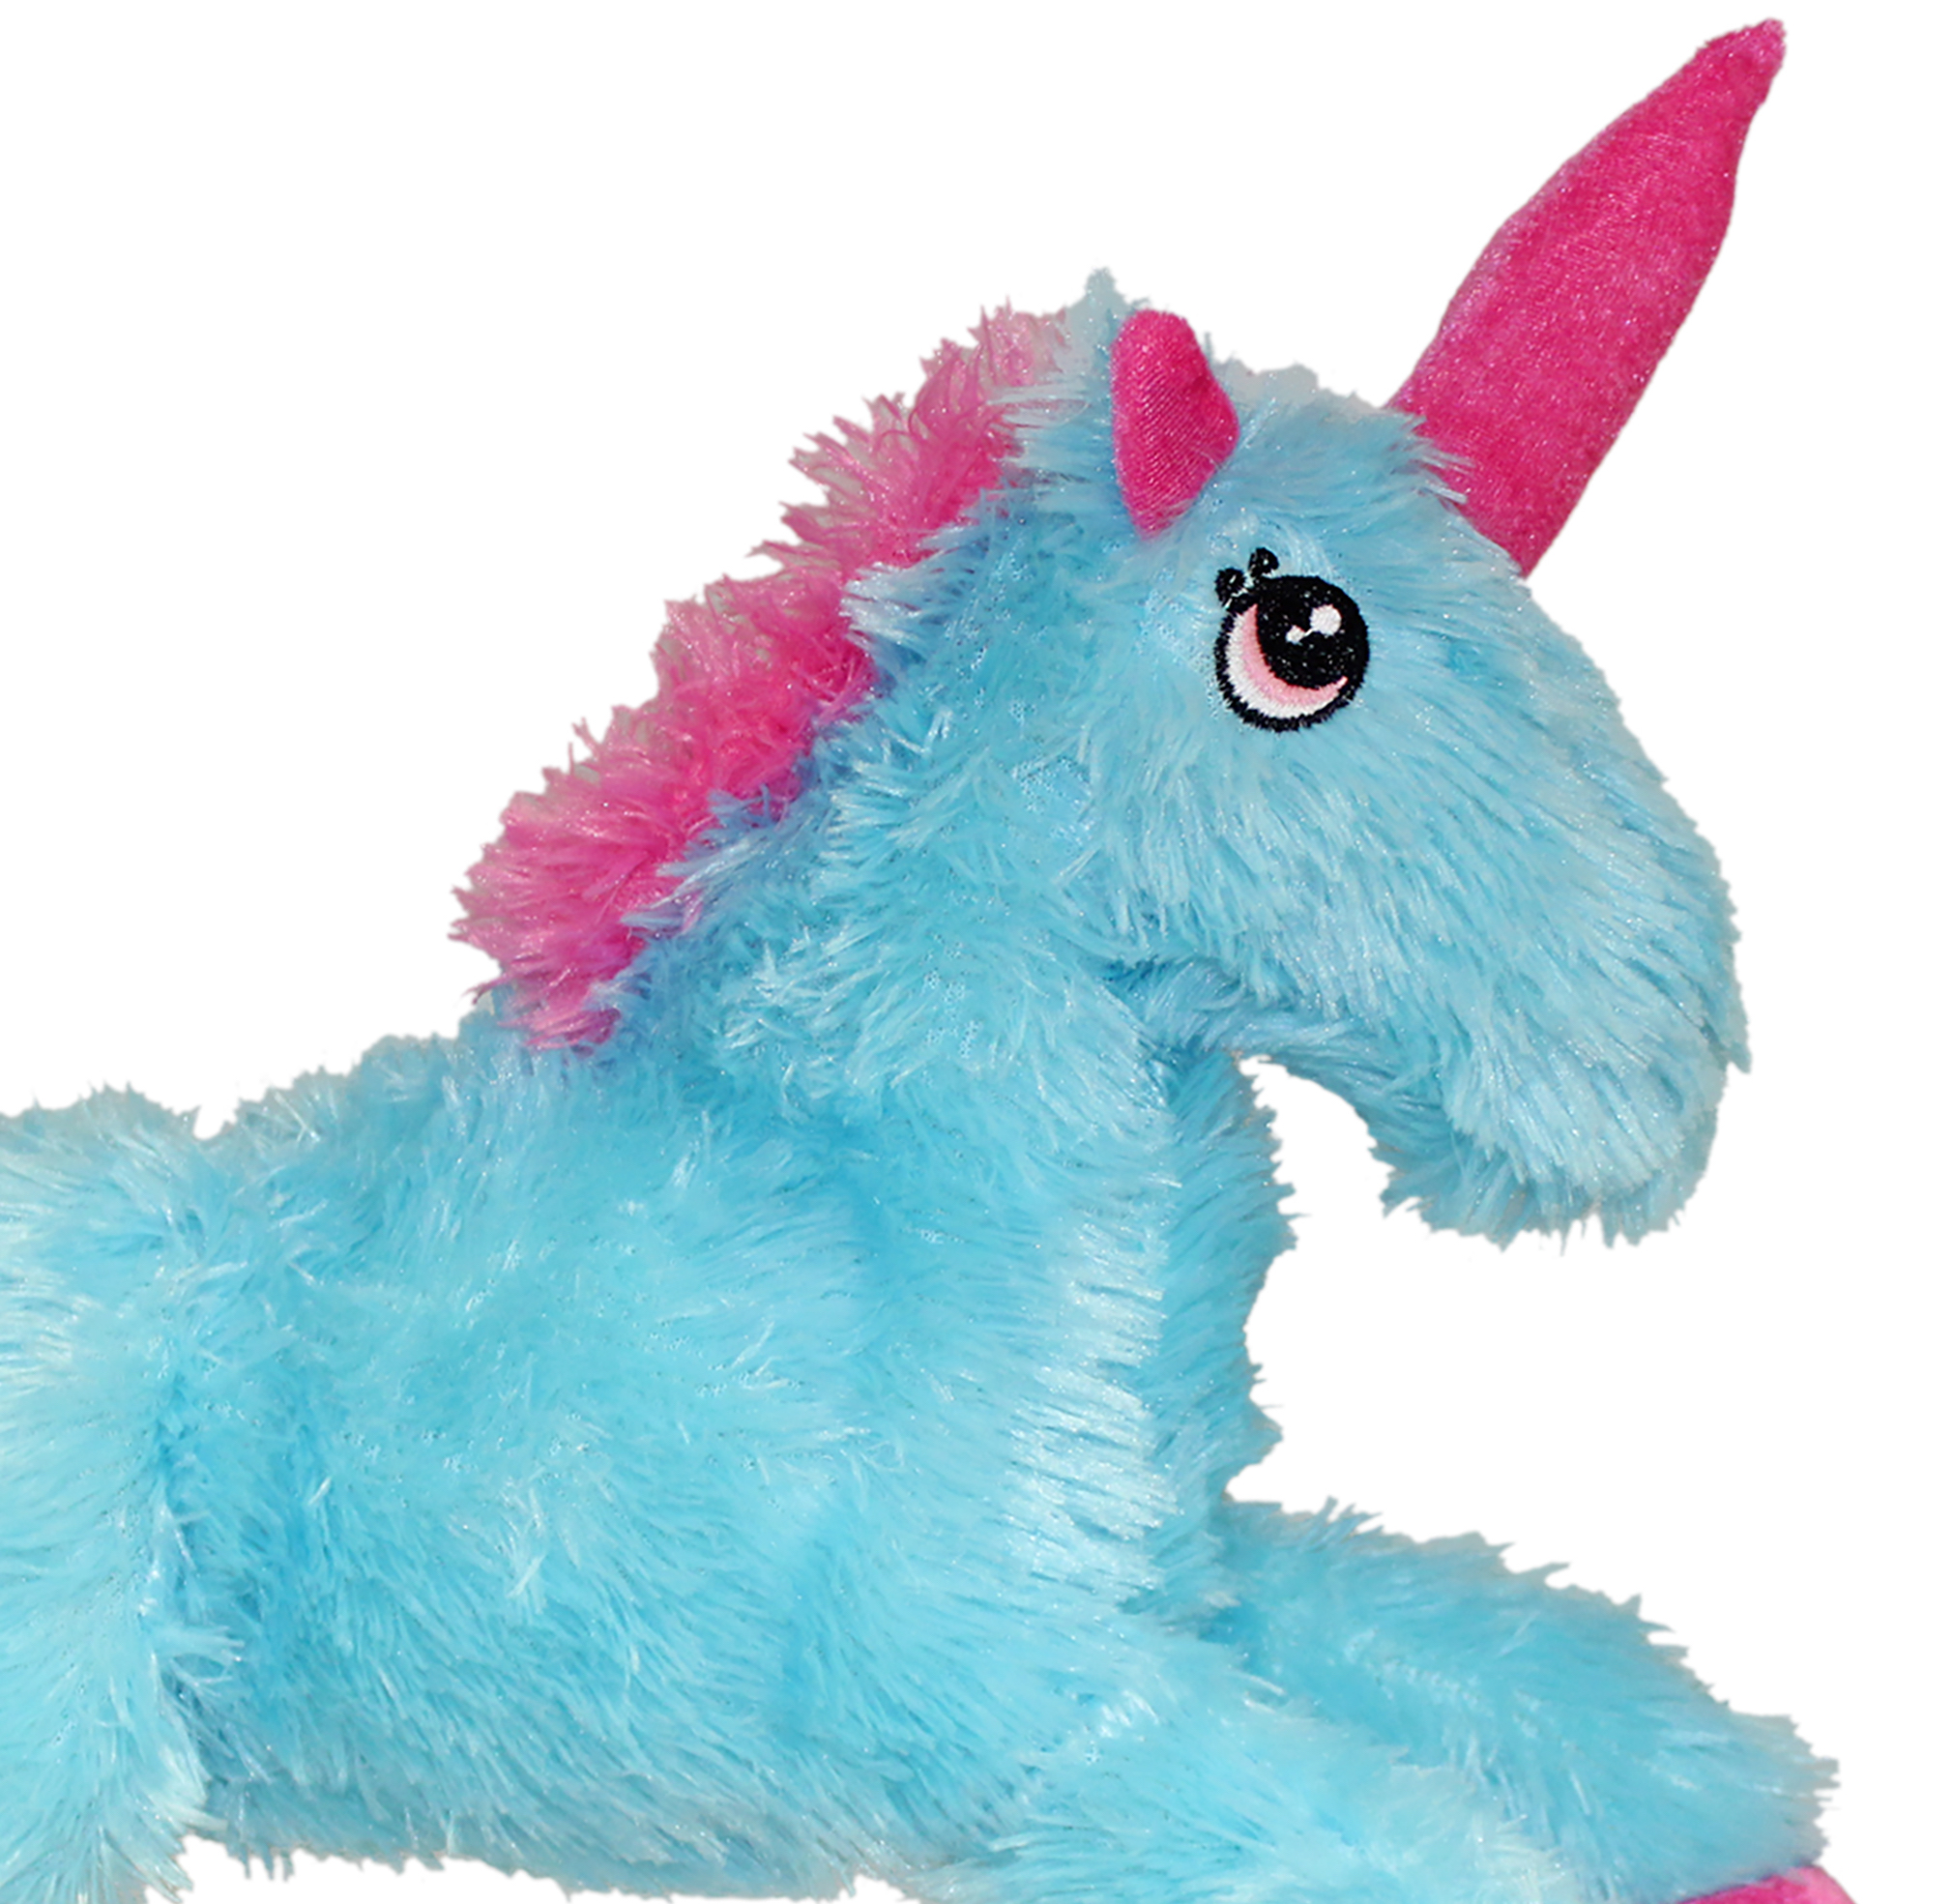 Plush Pal 22" Soft & Fluffy Blue Unicorn Stuffed Animal Toy - image 3 of 7